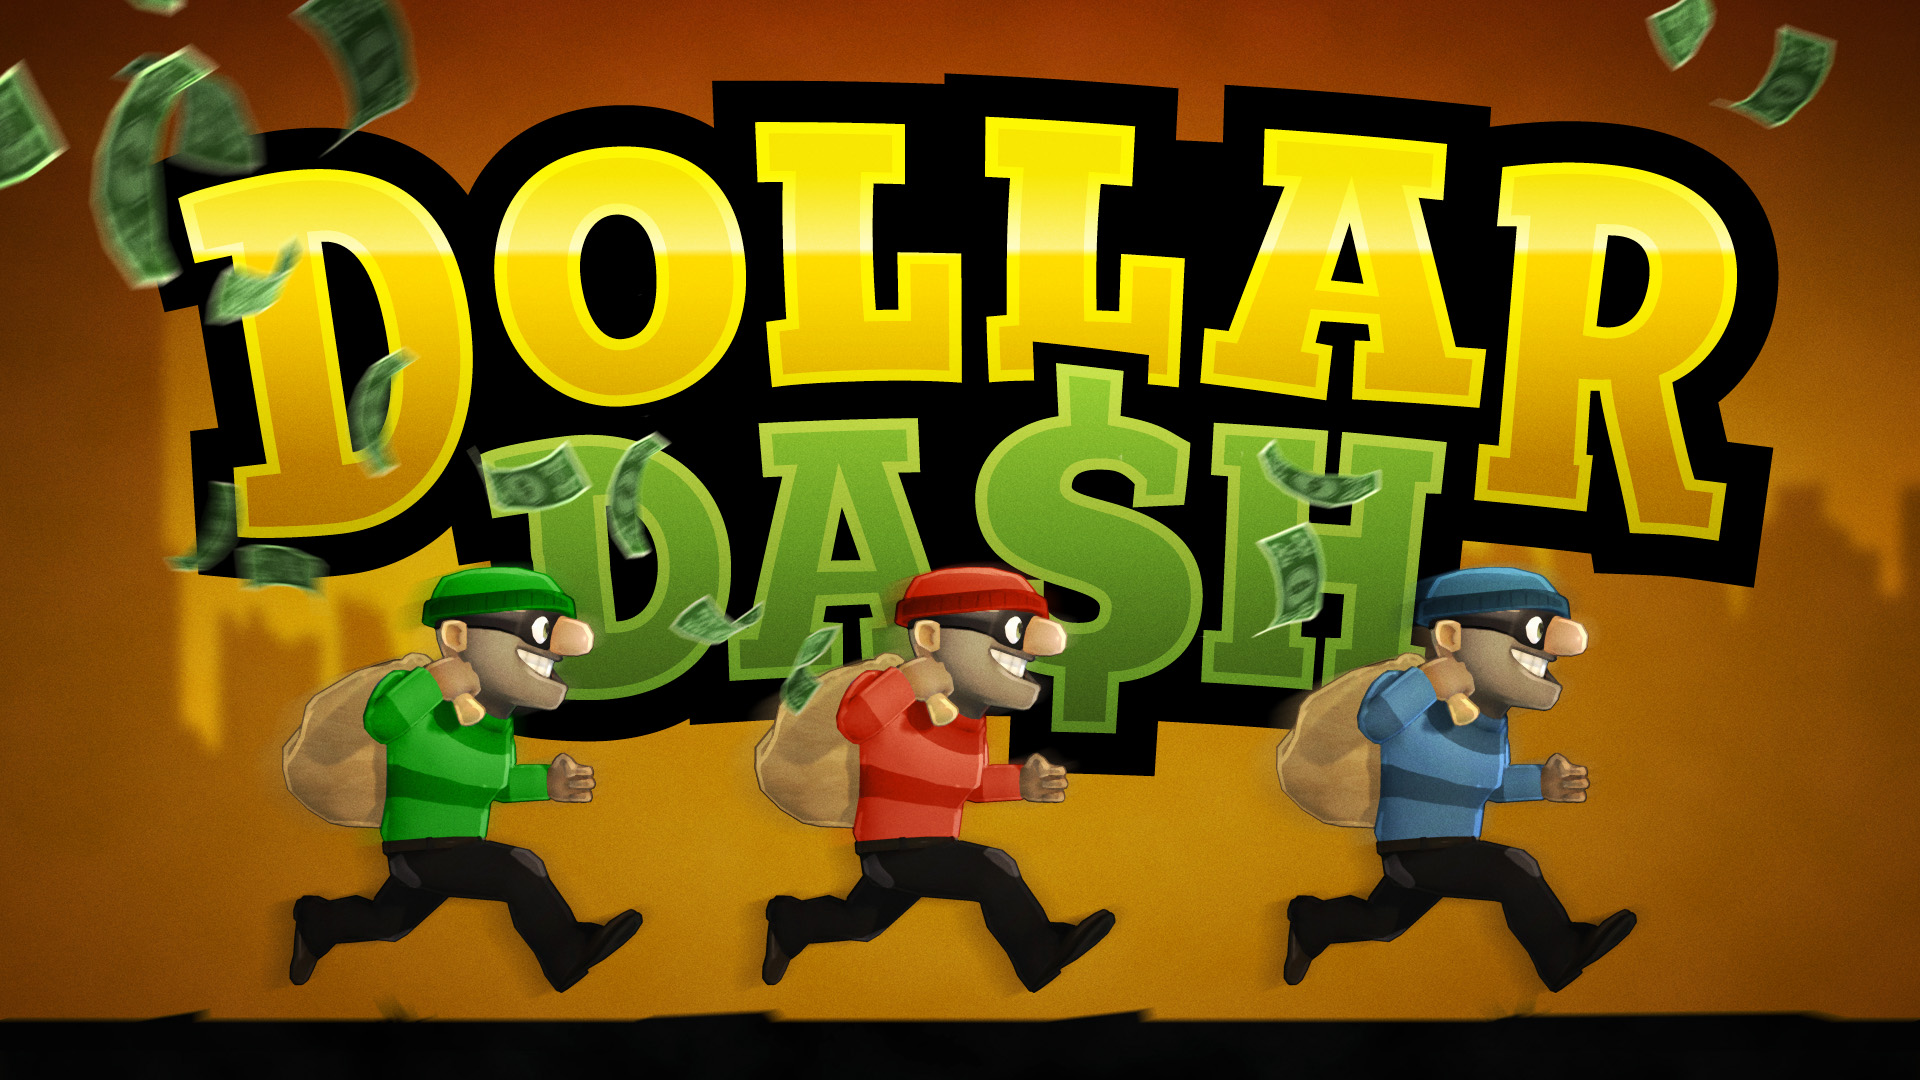 Dollar Dash